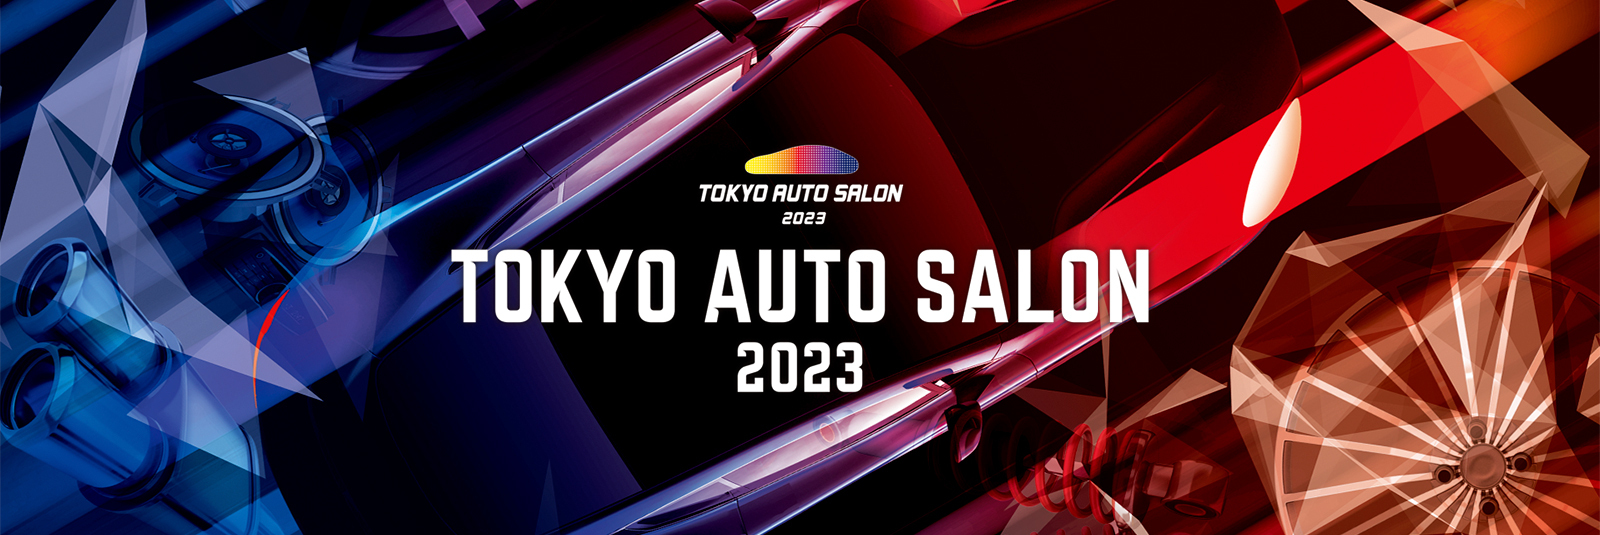 TOKYO AUTO SALON 2023